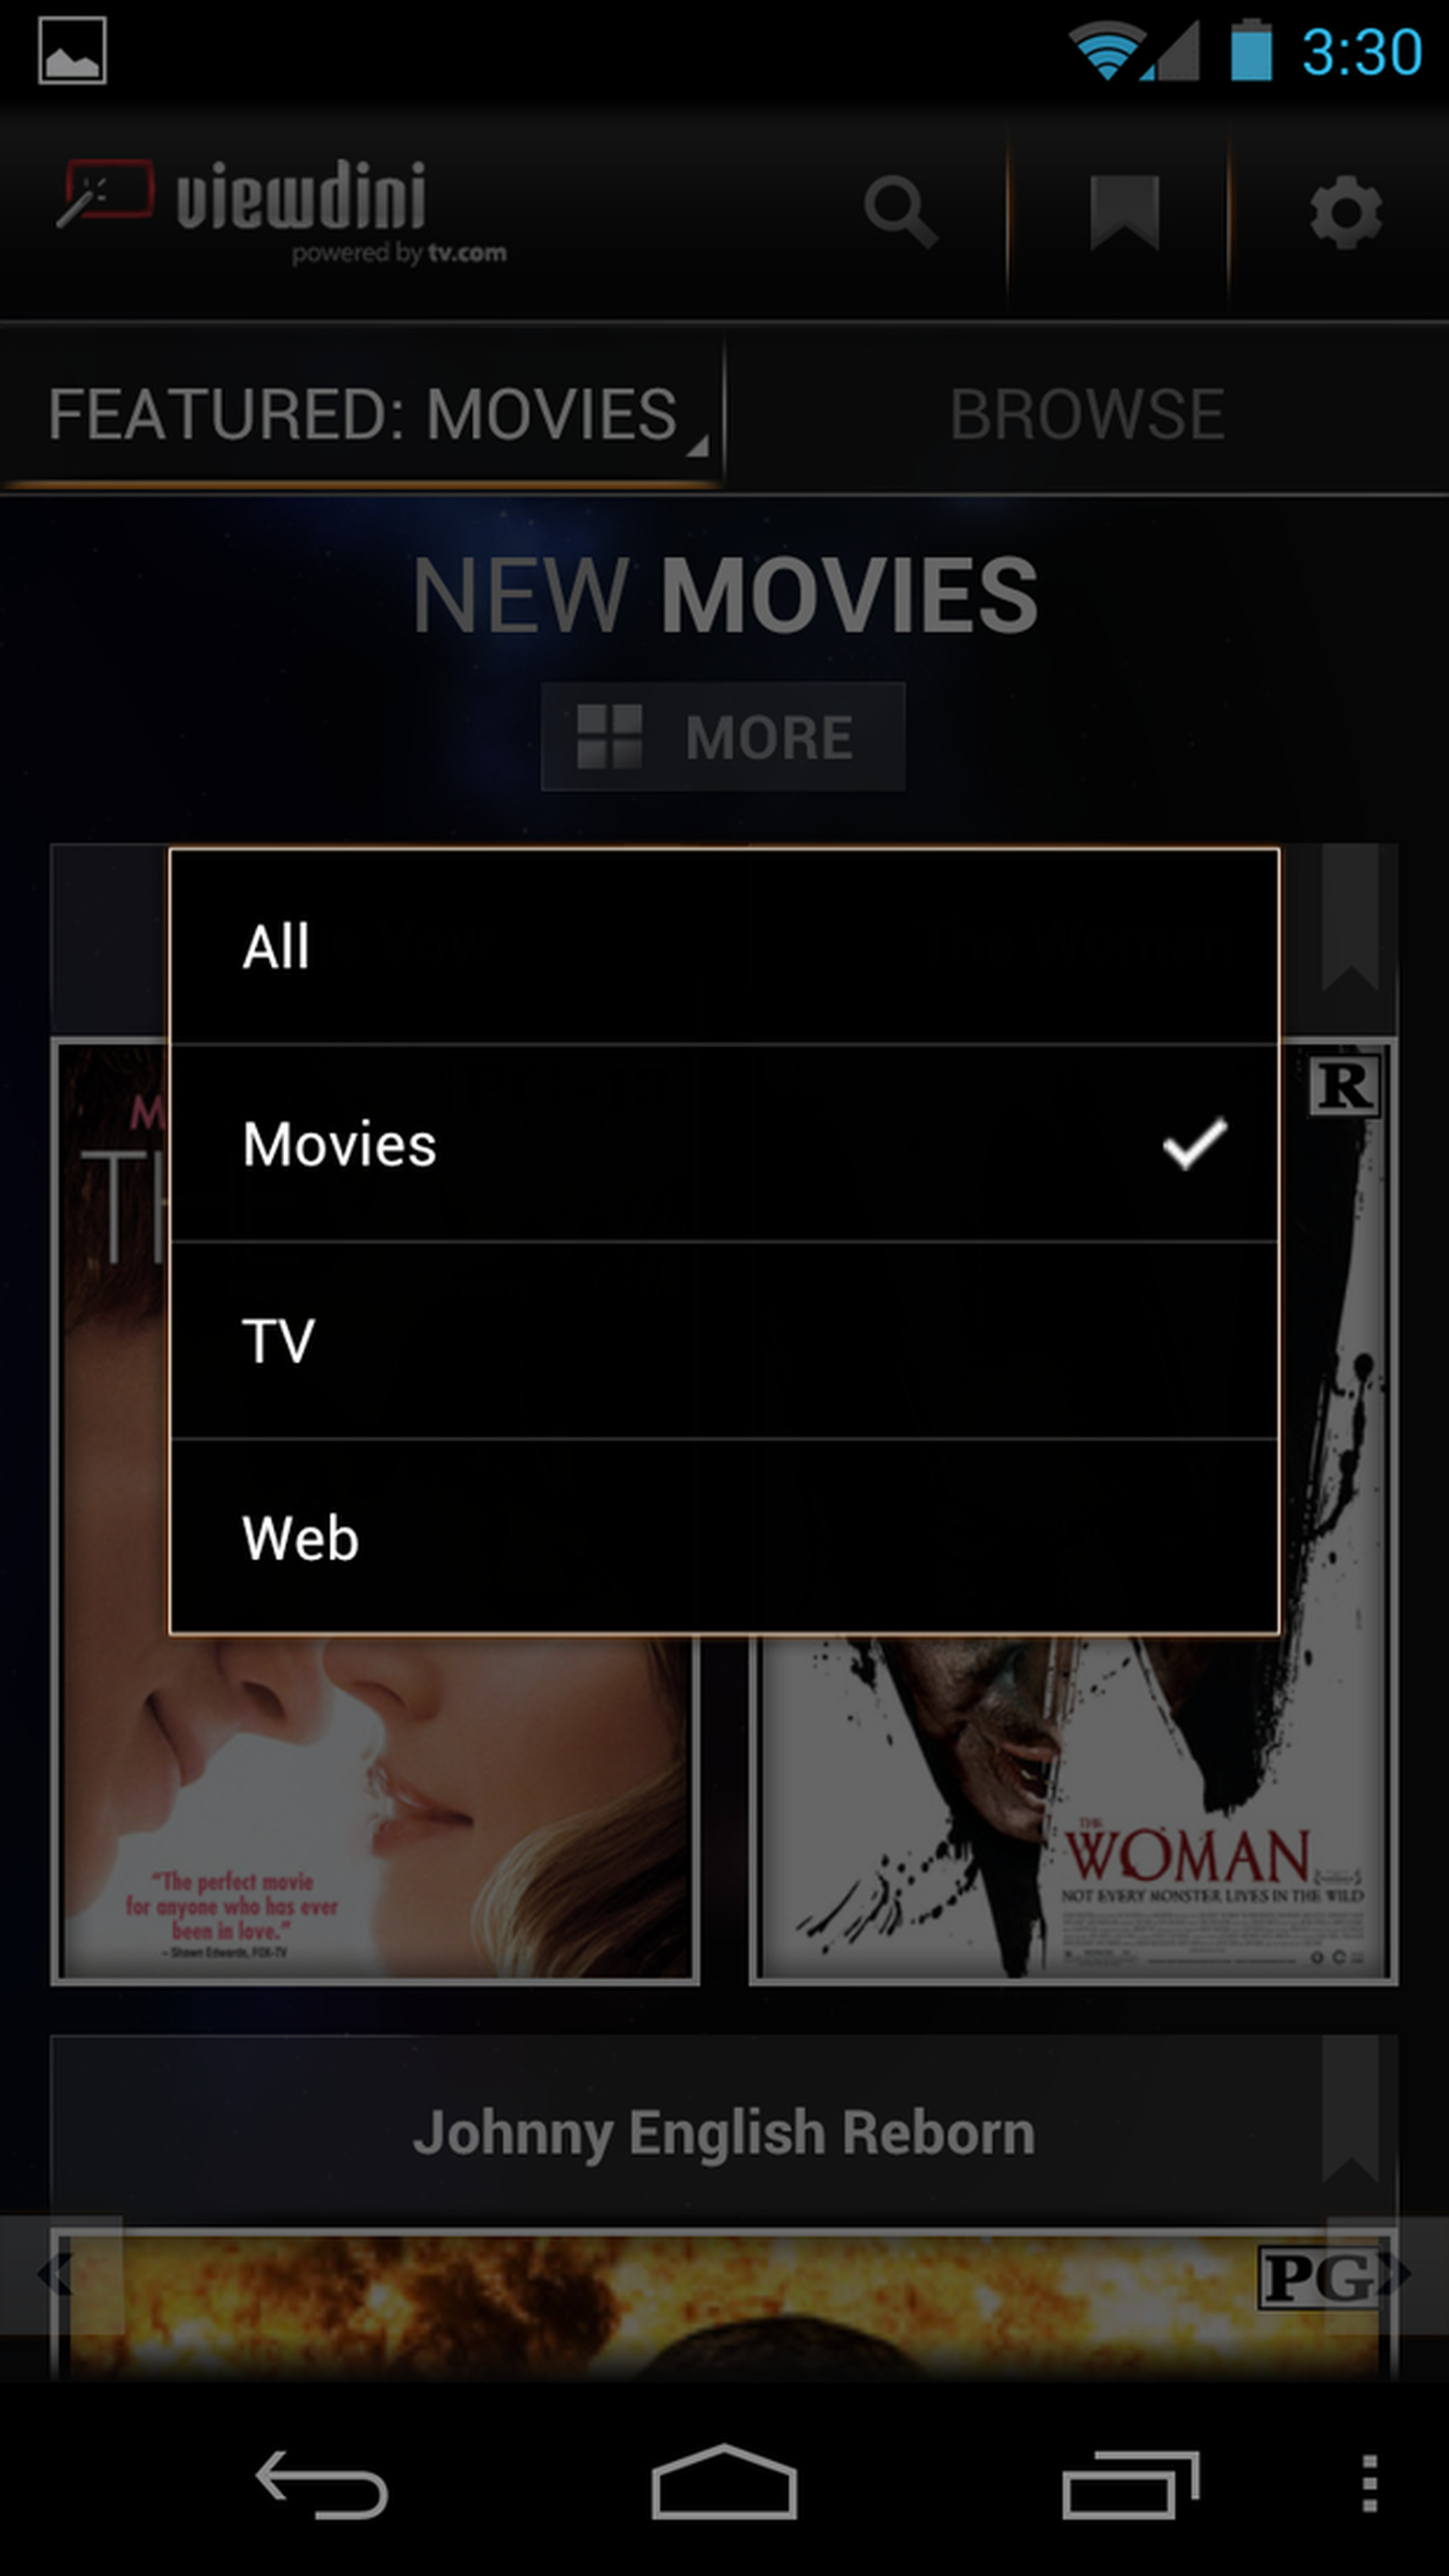 Verizon Viewdini for Android screenshots